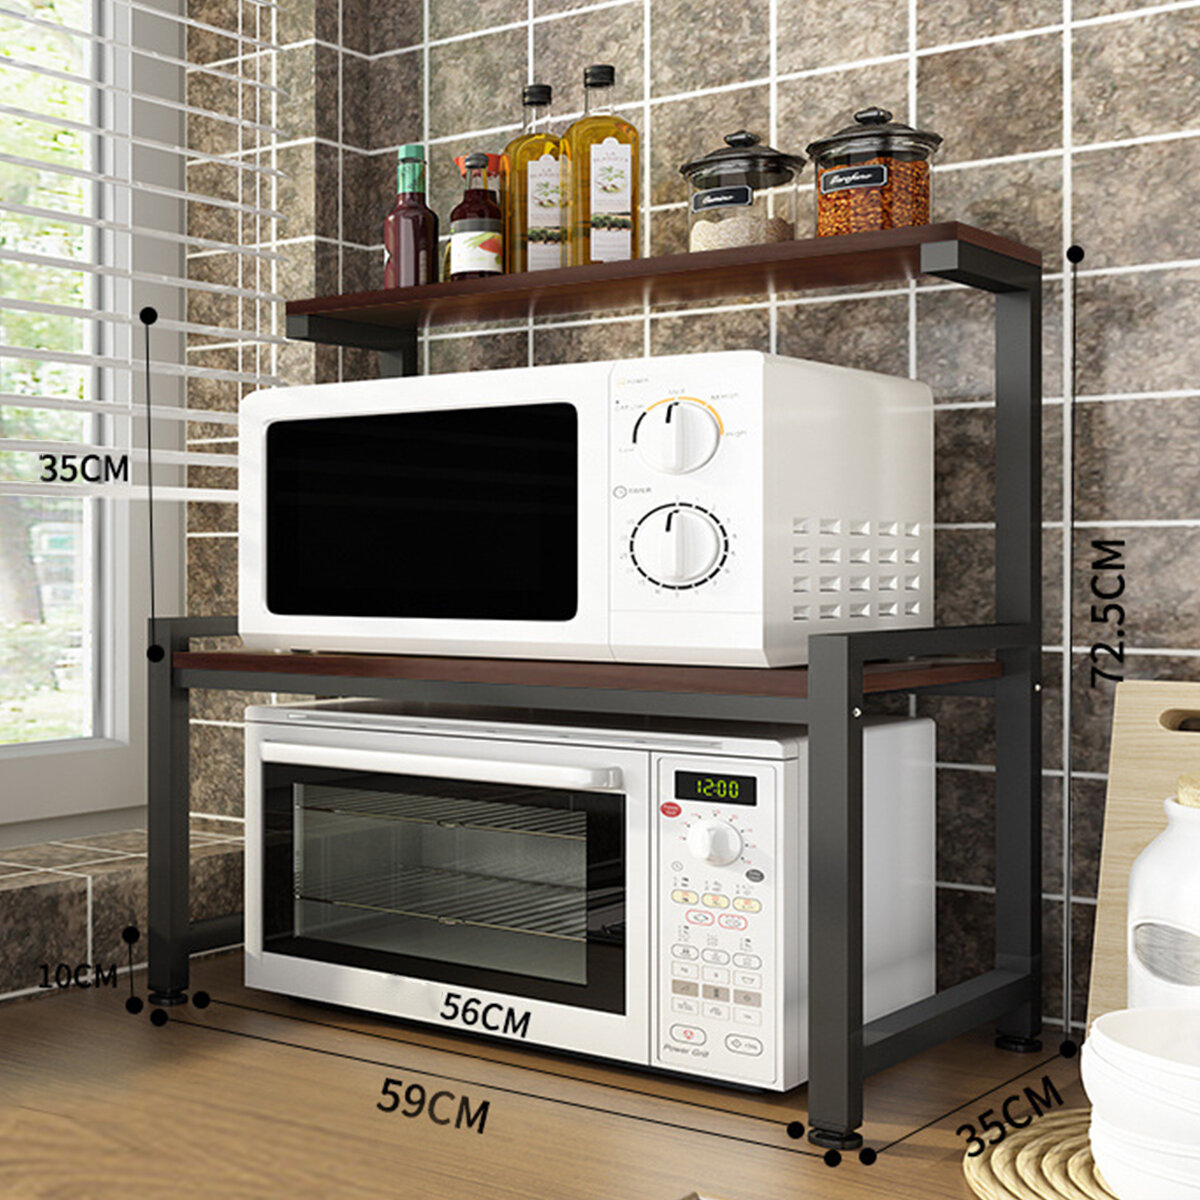 

2 Tier Microwave Oven Shelf Rack Stand Kitchen Office Condiment Storage